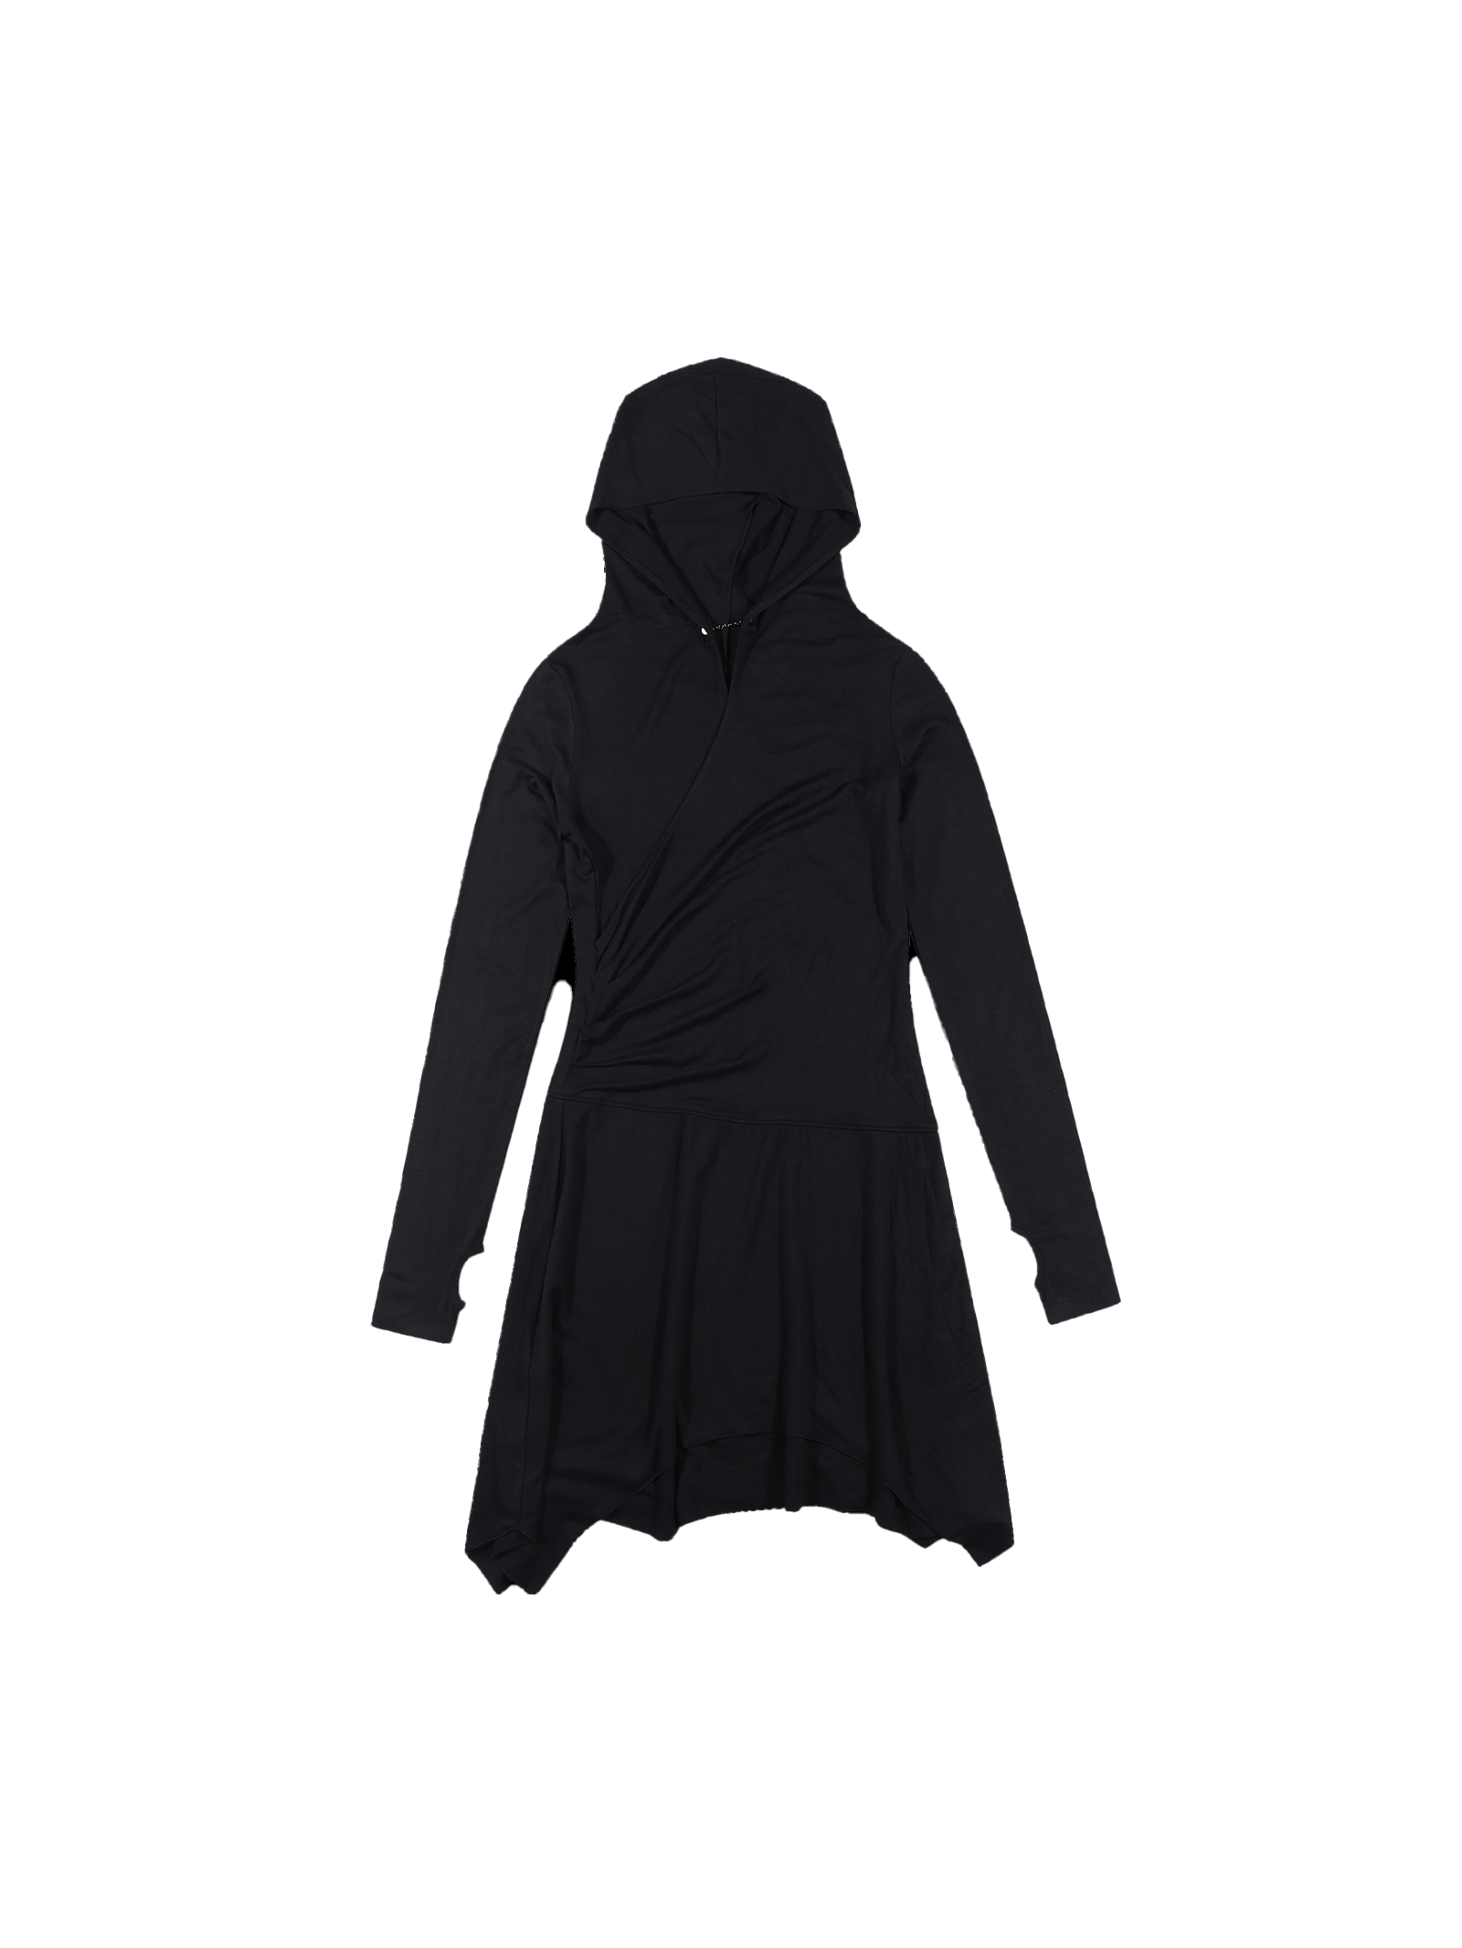 Draped hooded dress / Black